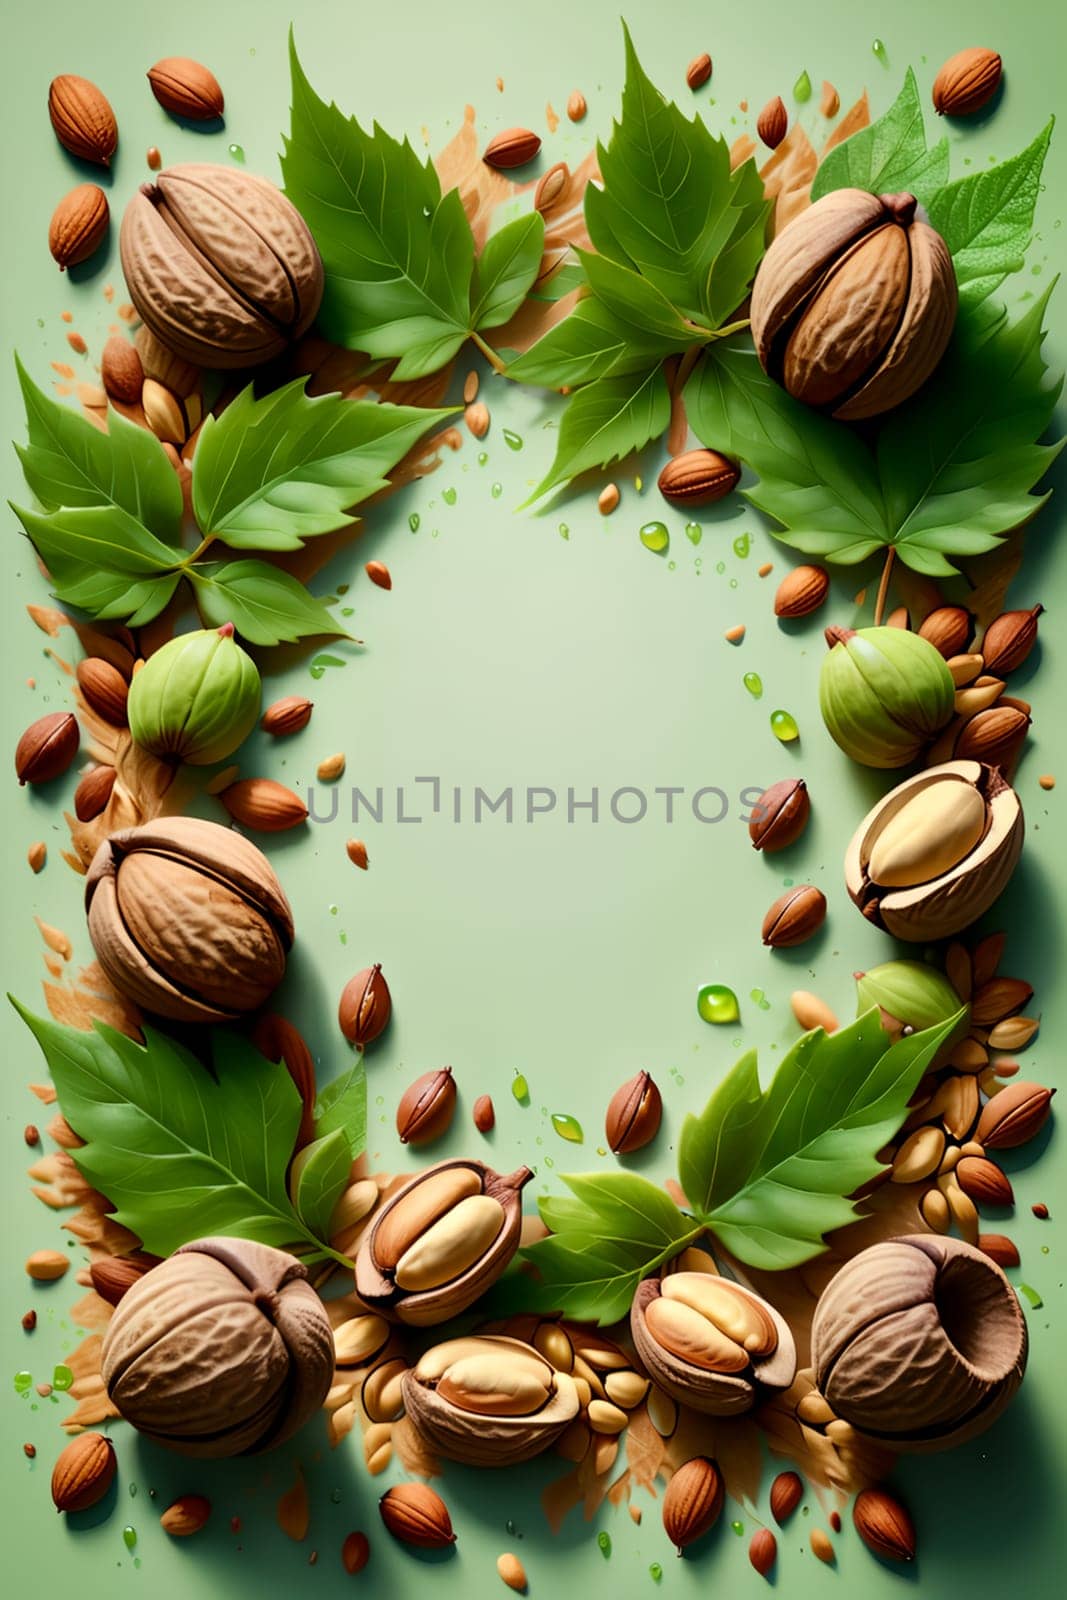 Hazelnuts with foliage isolated on green background, frame